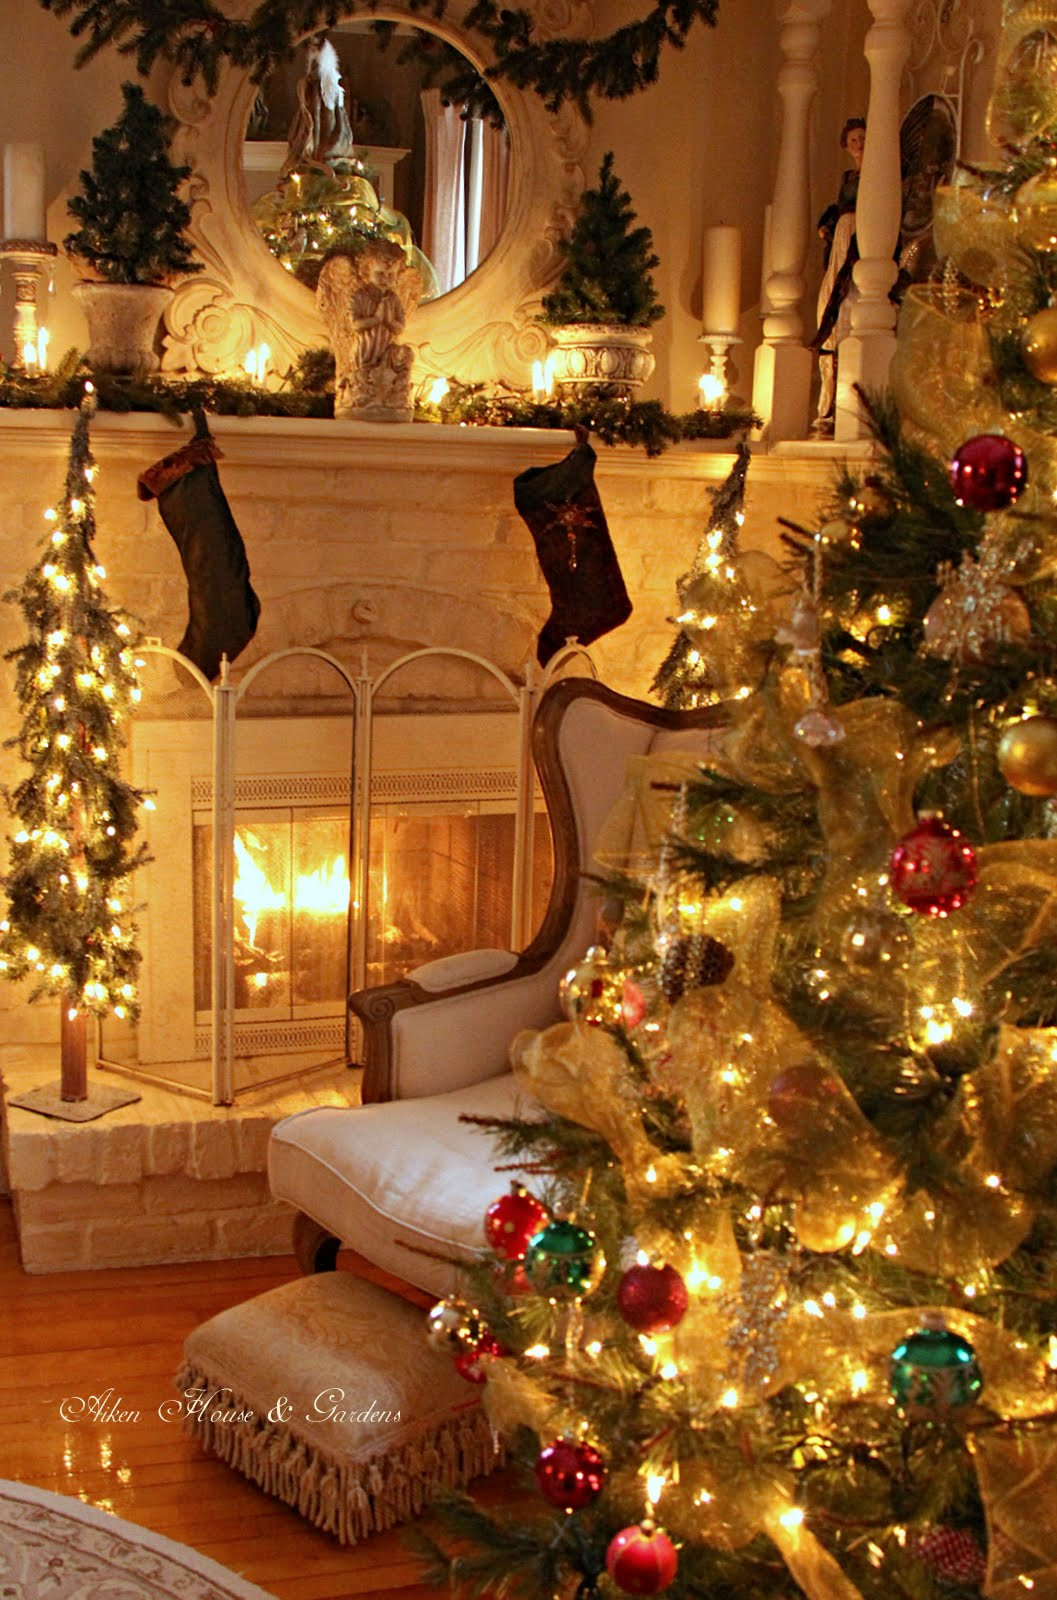 Cozy Christmas Fireplace
 Aiken House & Gardens Warm & Cozy Christmas